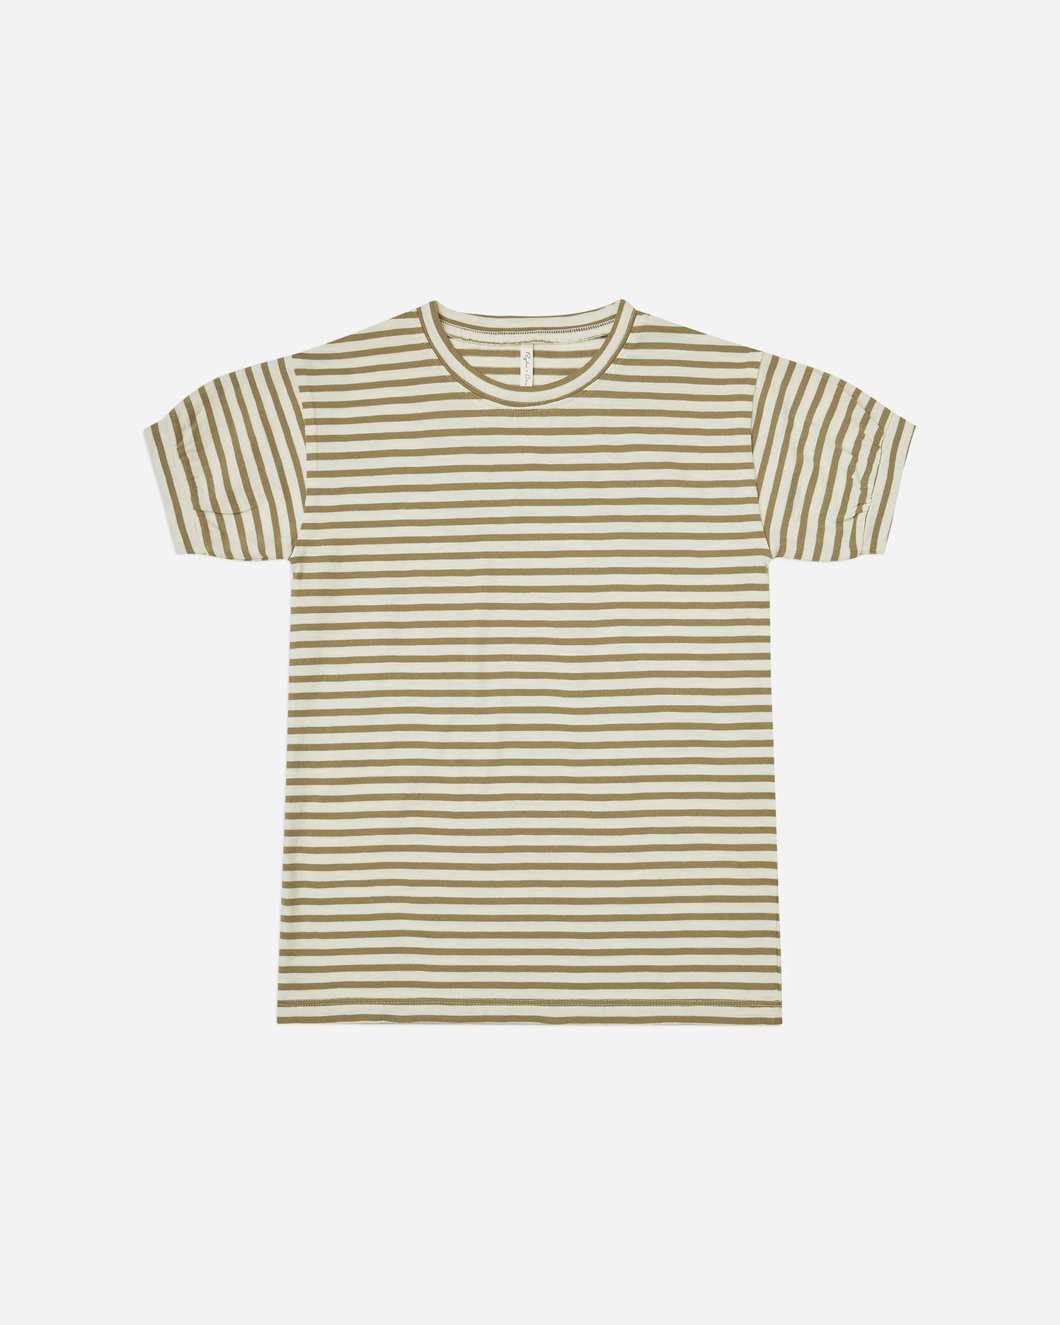 Rylee + Cru Jersey Shirt Dress - Olive Stripe - 2/3Y, 6/7Y